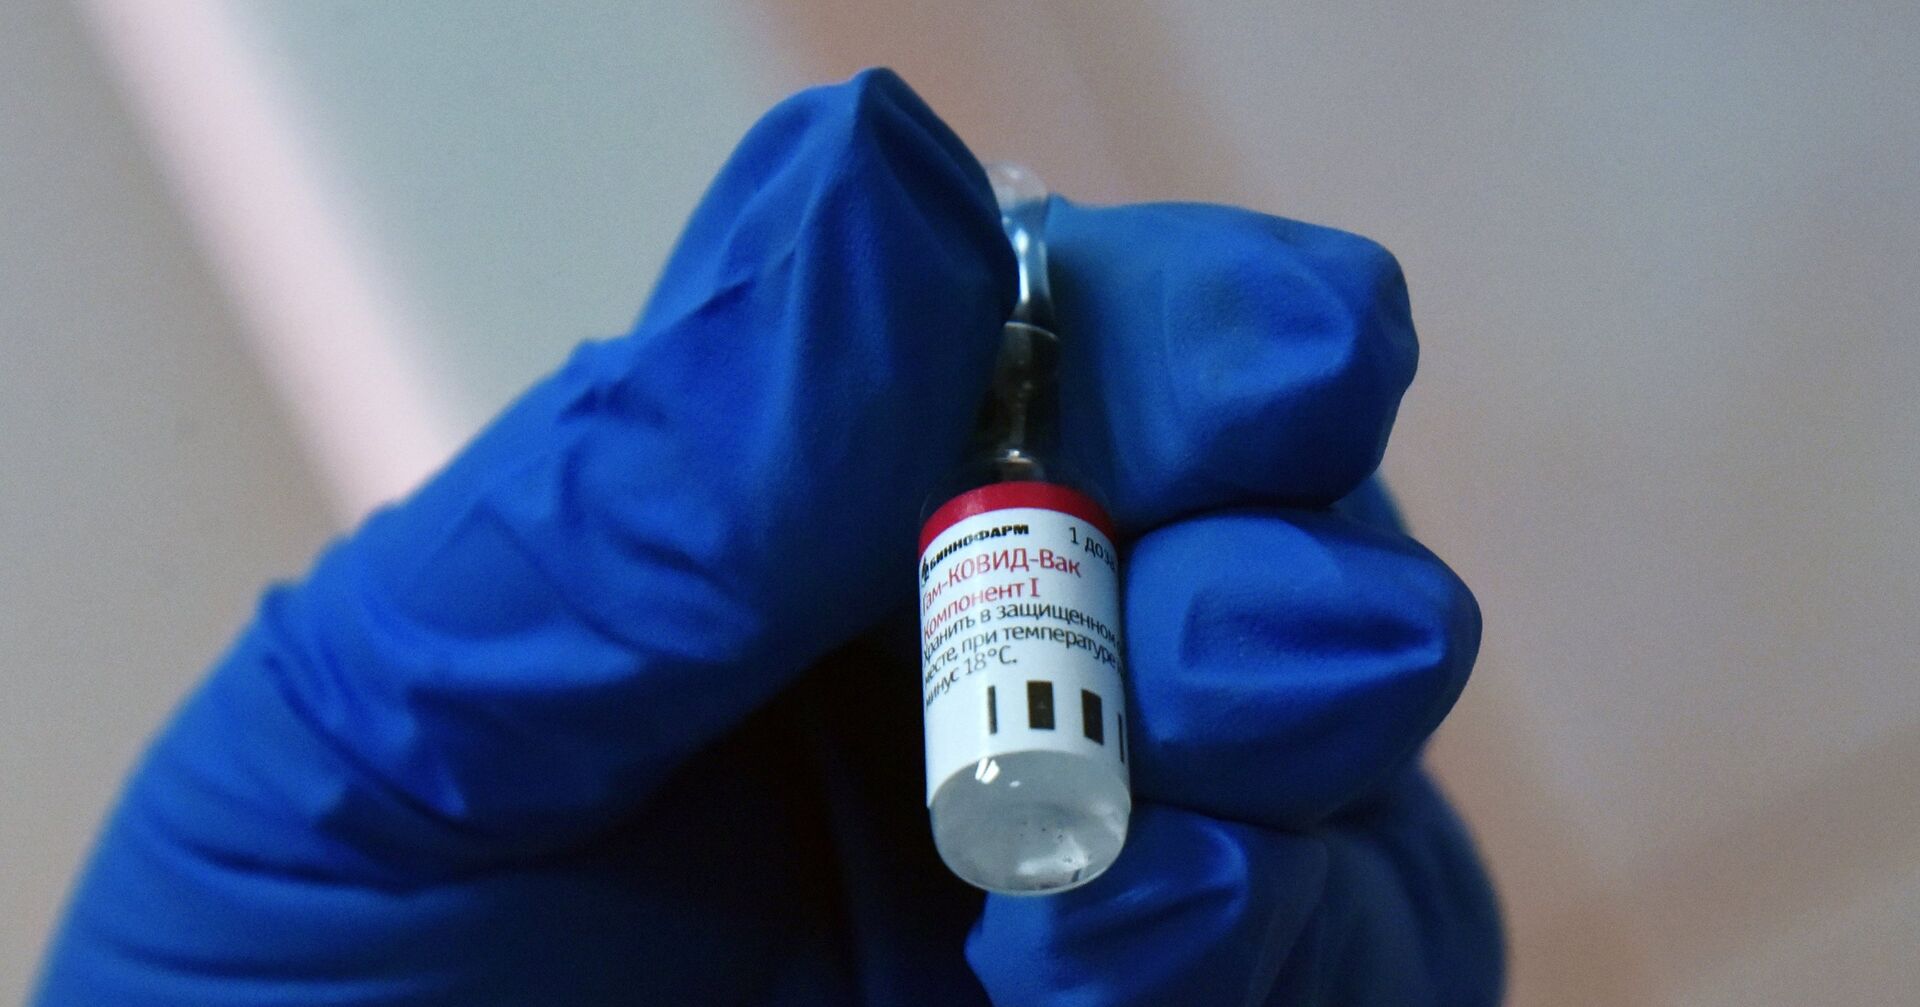 Медицинский работник держит в руке вакцину от COVID-19 Спутник-V - ИноСМИ, 1920, 09.02.2021